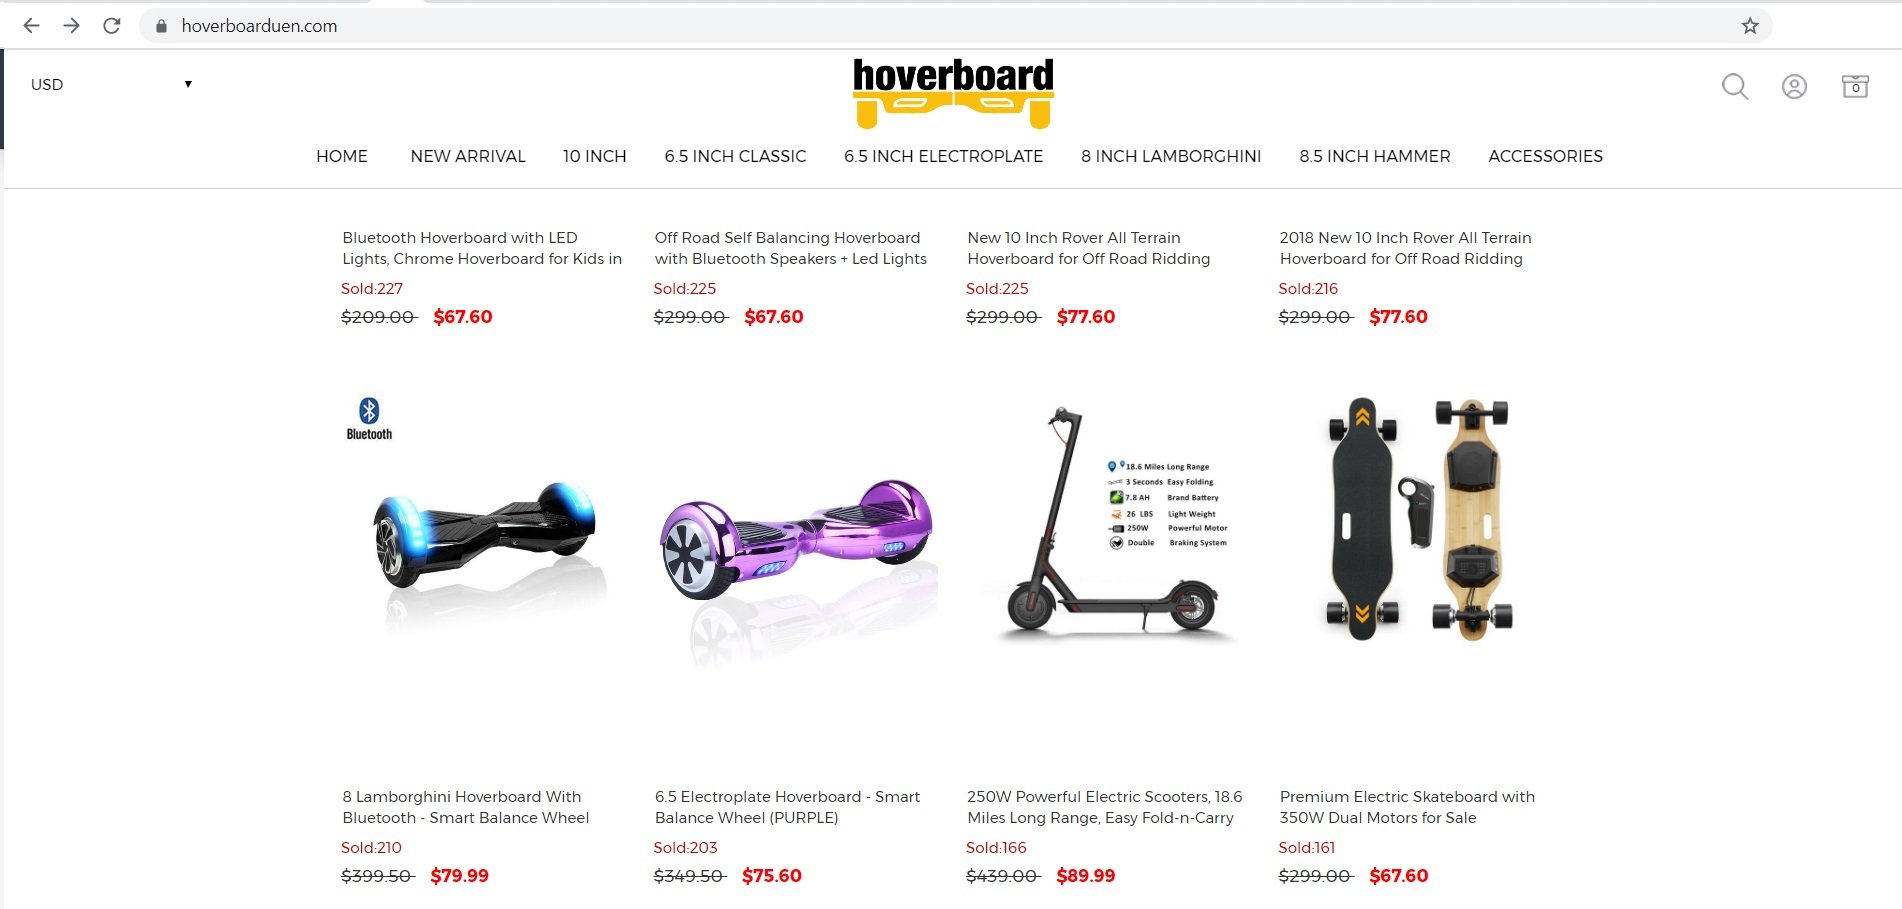 Hoverboarduen located at hoverboarduen.com